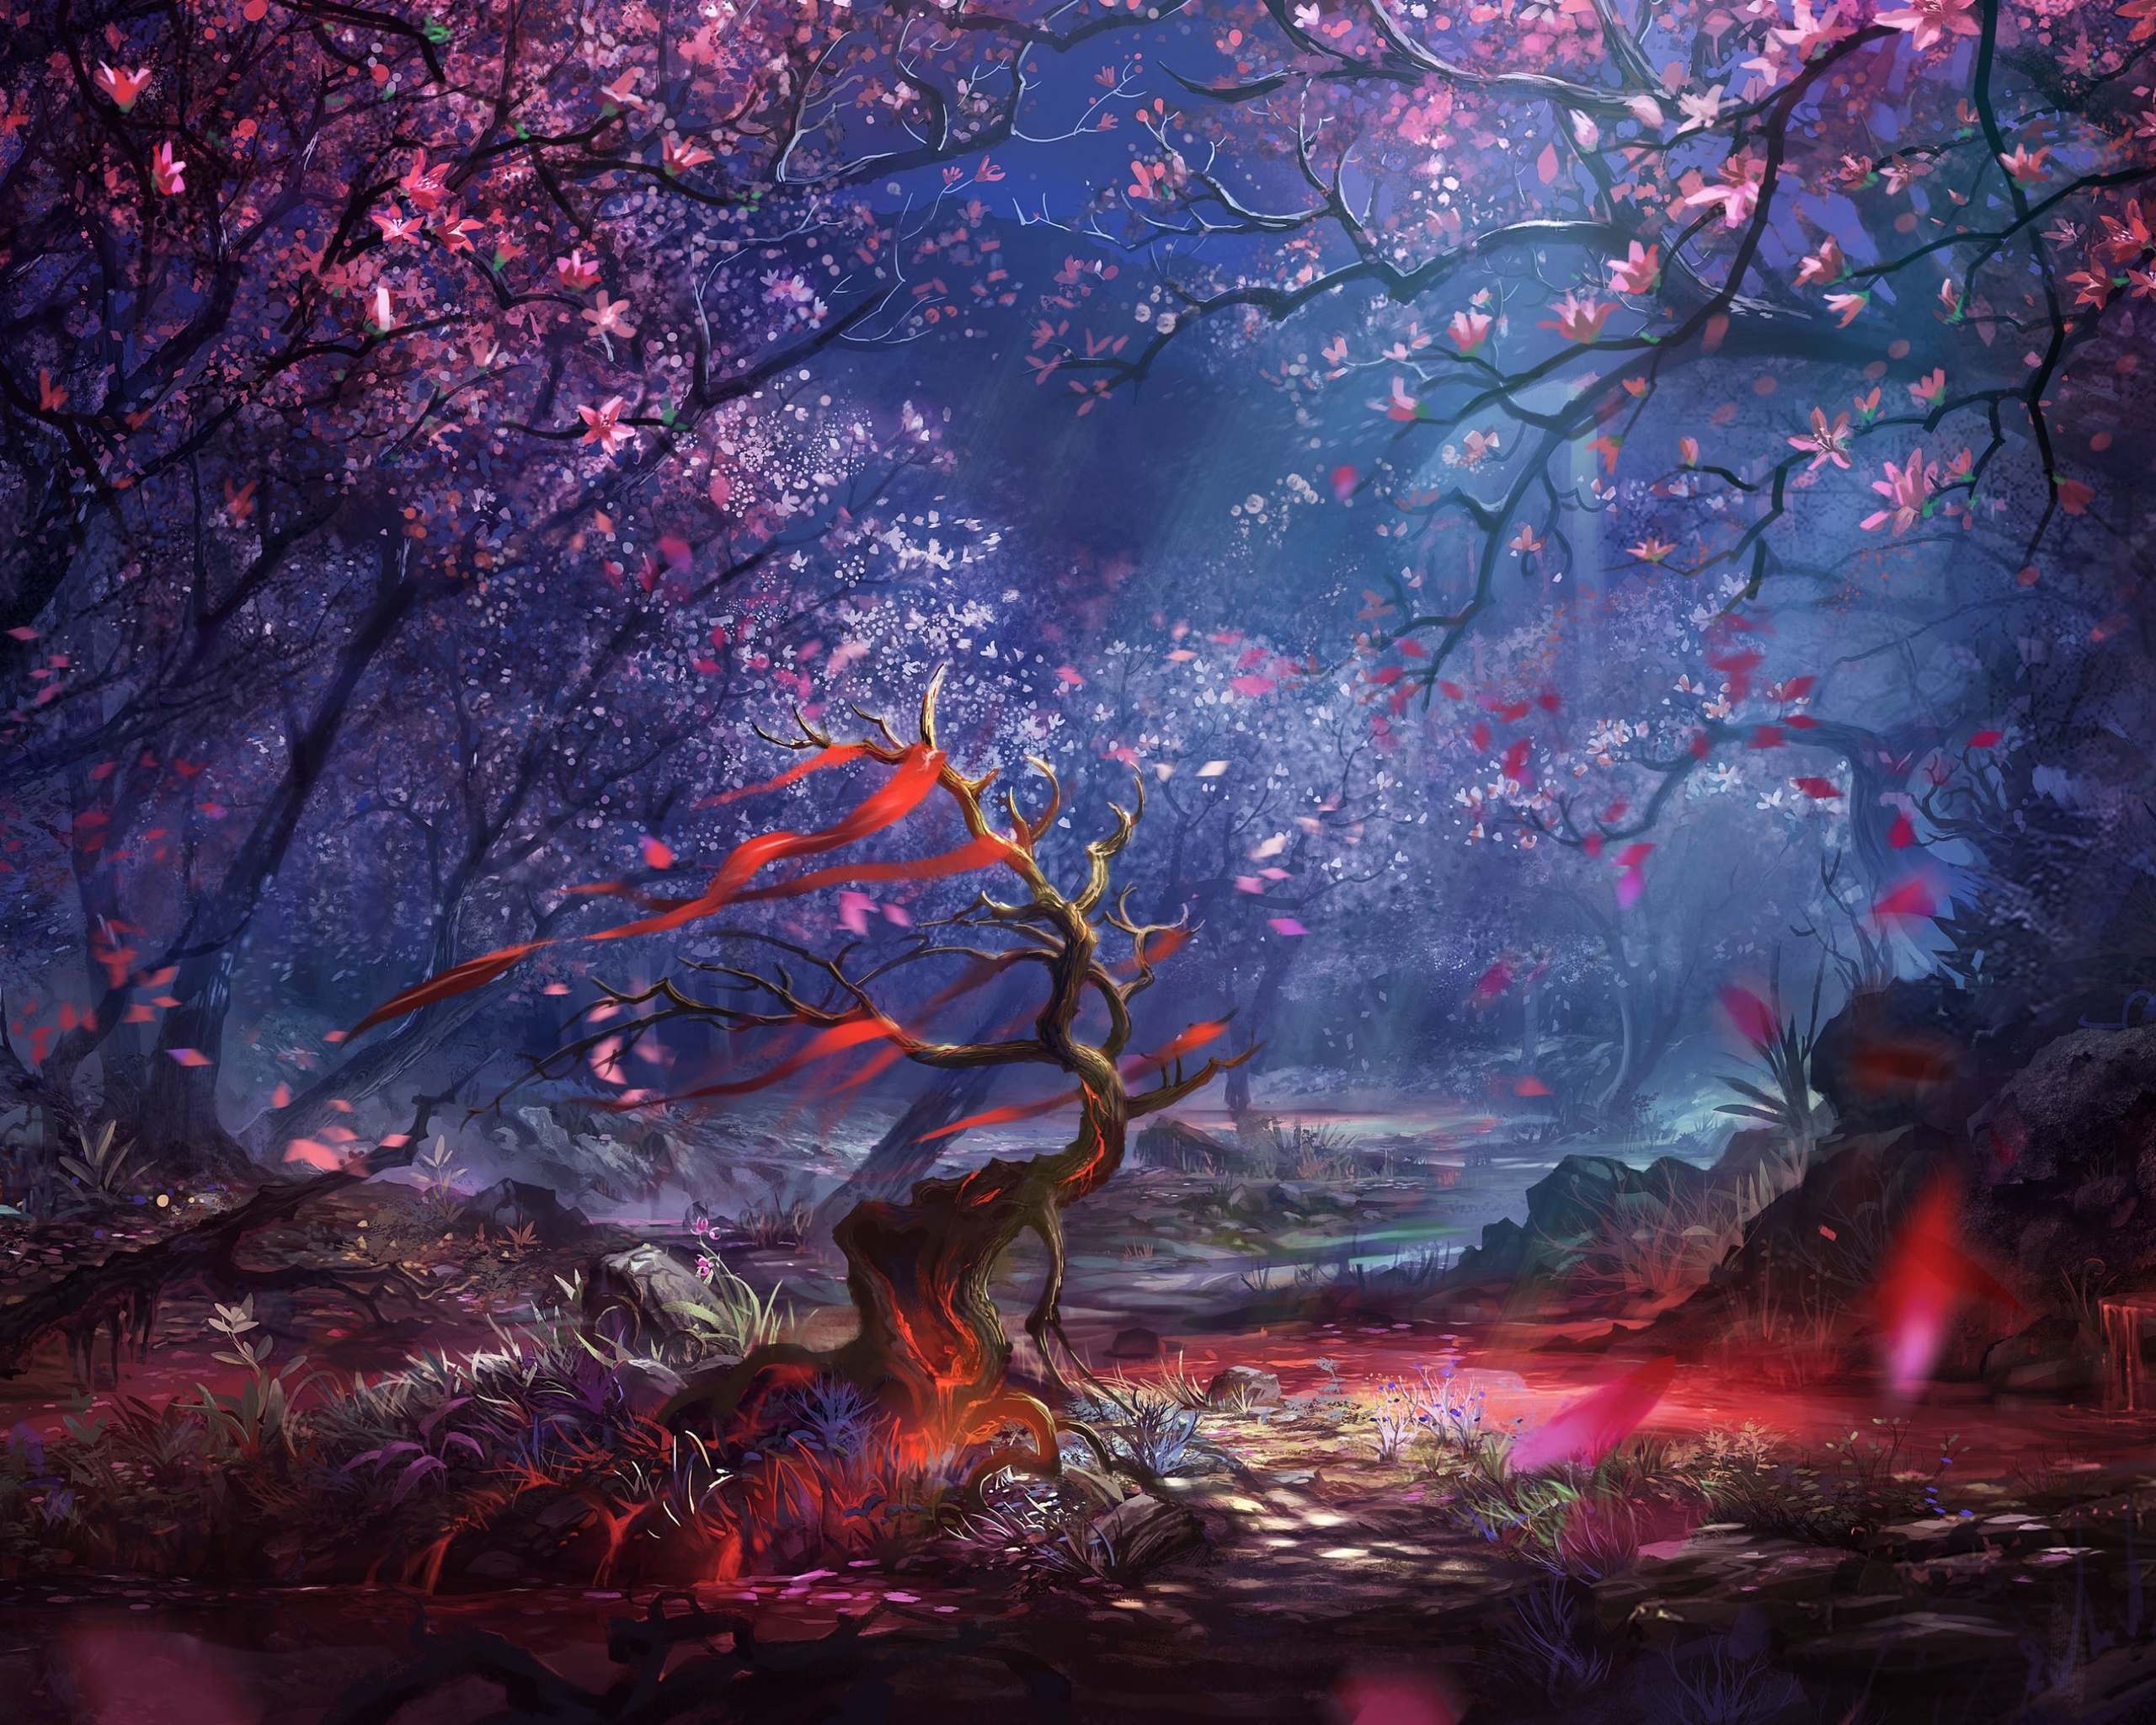 Image: Sakura, forest, trees, night light, leaves, stump, branches, water